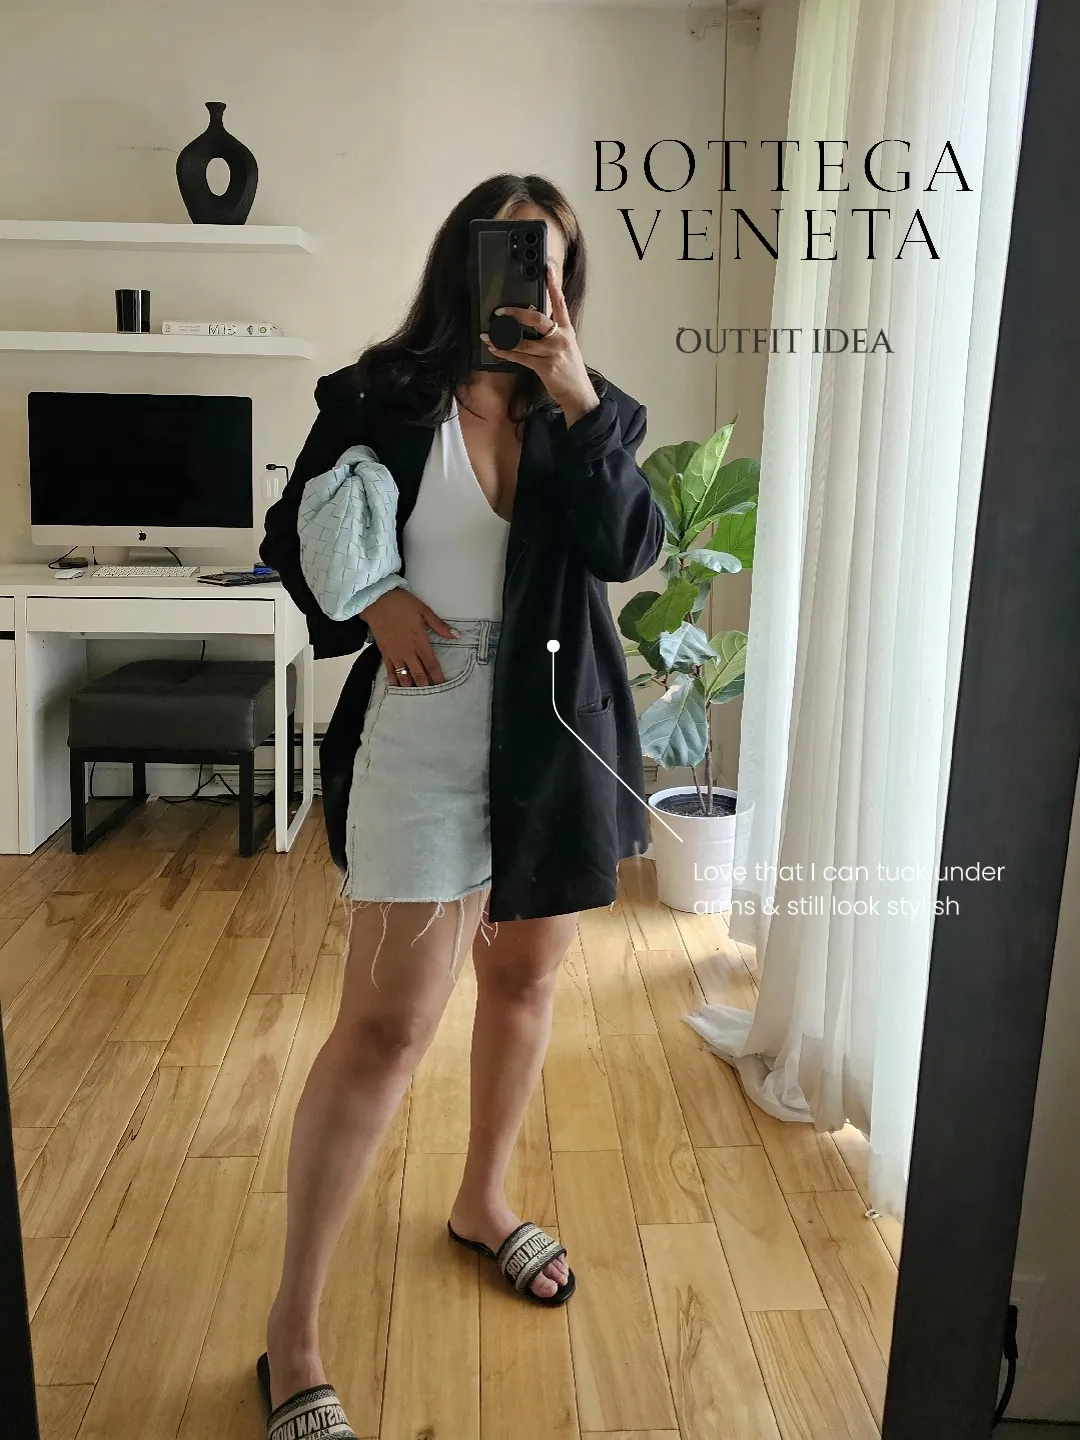 My Honest Review of the Bottega Veneta Mini Jodie Bag - Mia Mia Mine